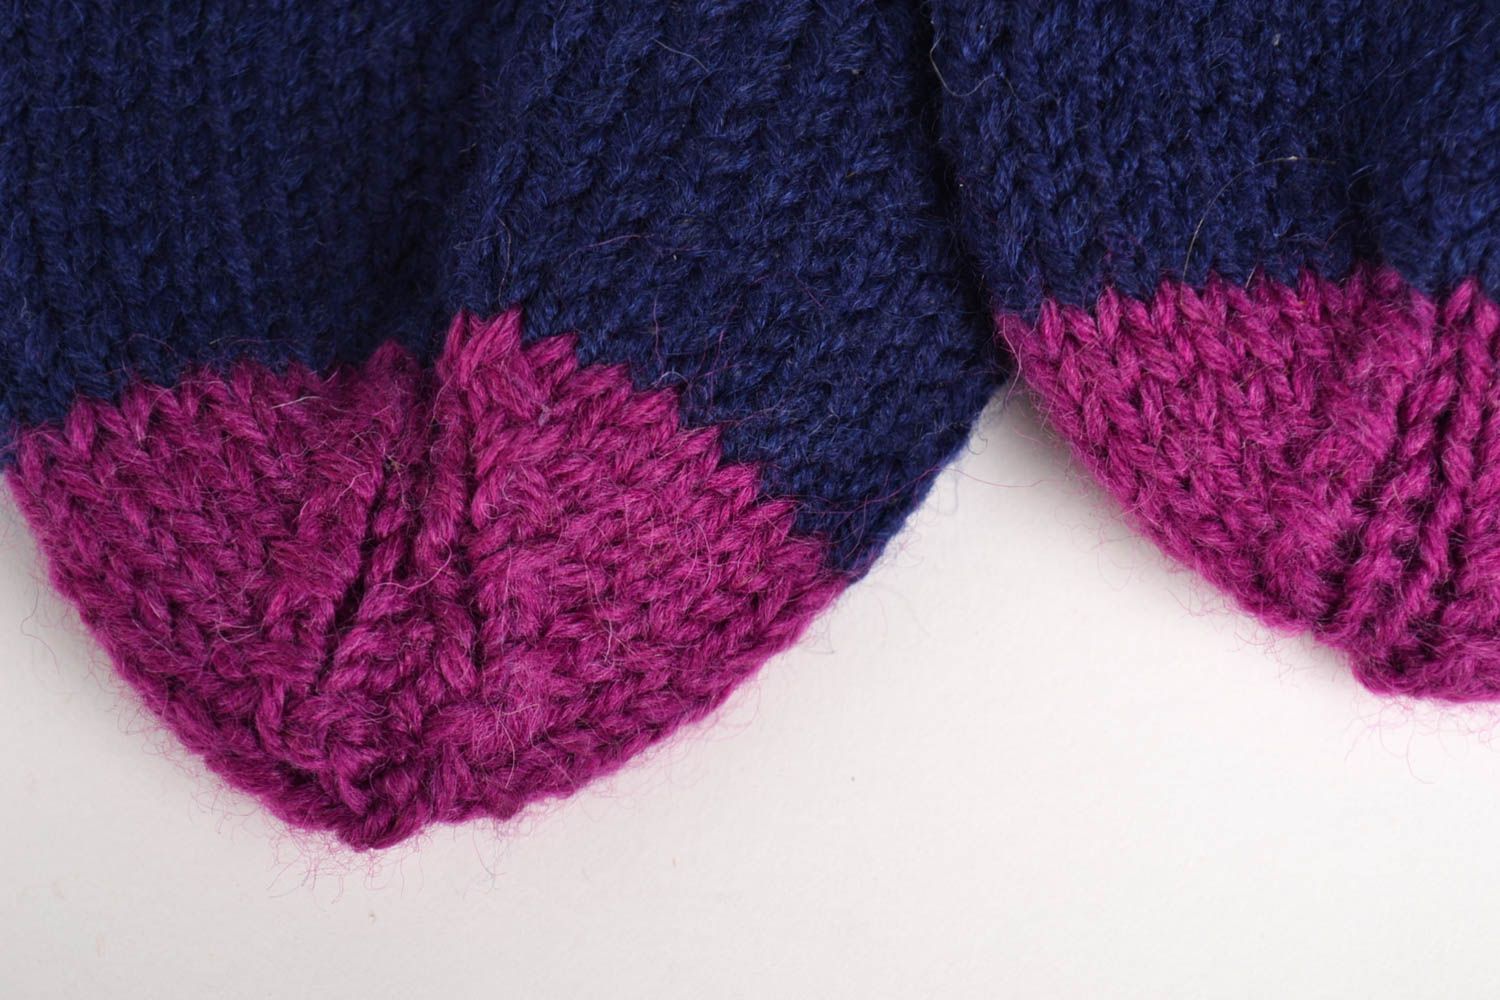 Stylish handmade knitted socks warm socks handmade accessories for girls photo 3